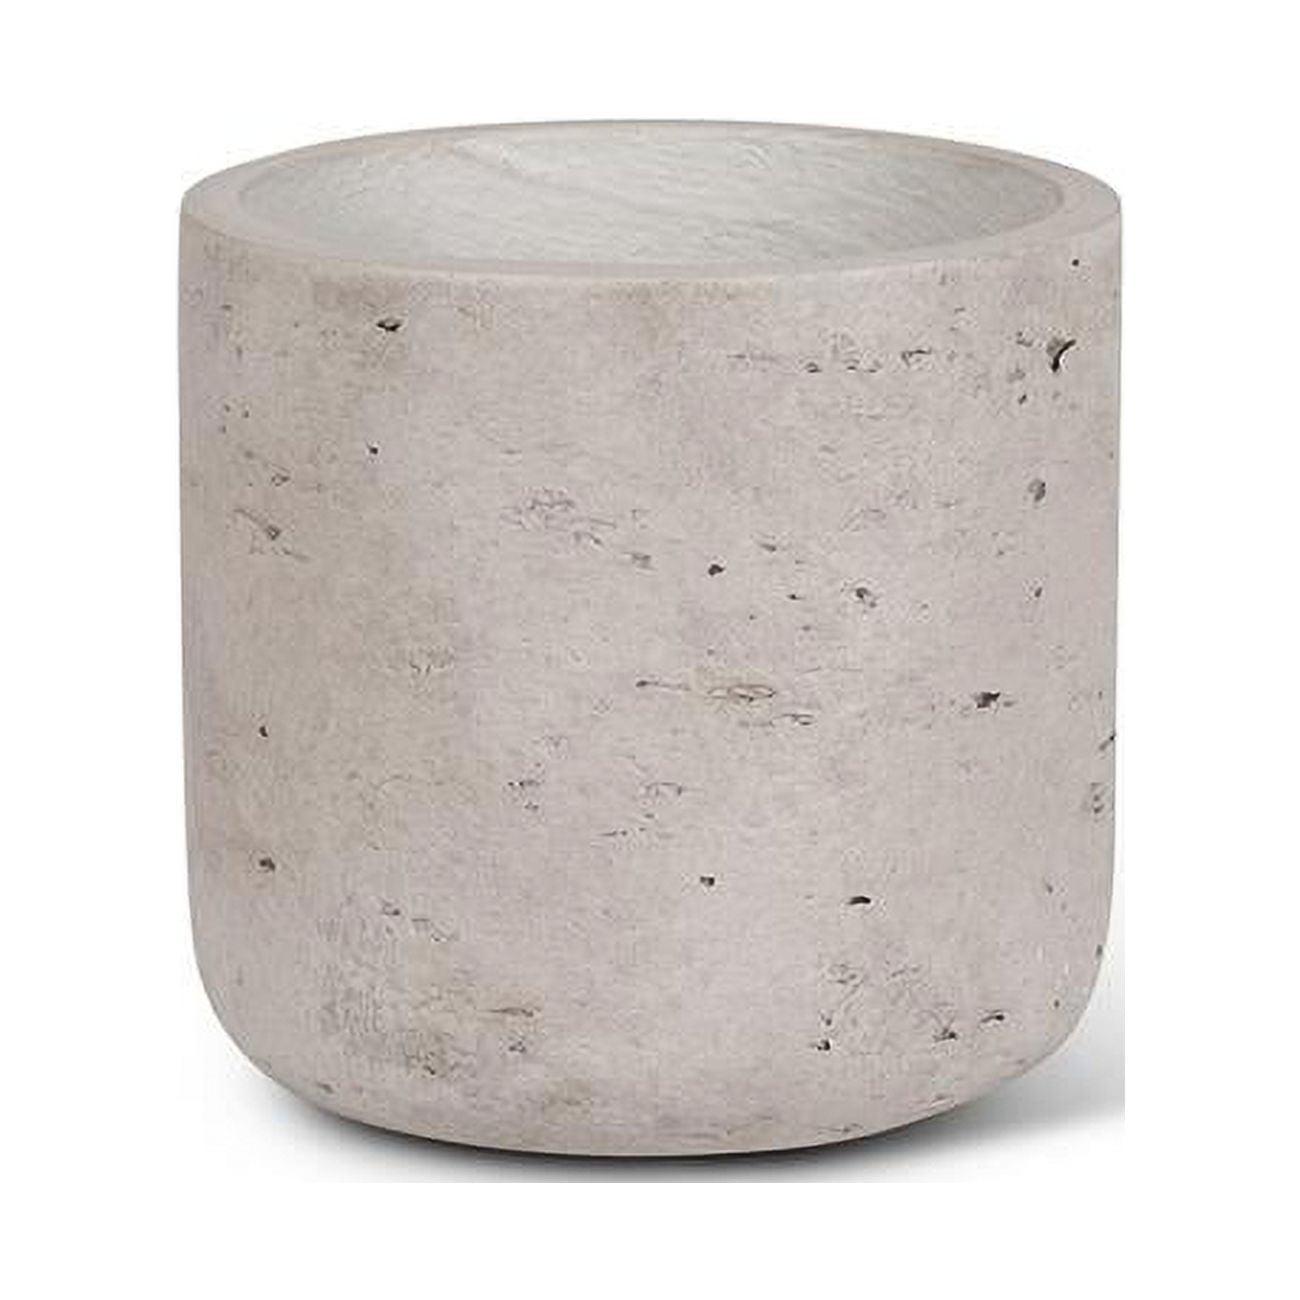 Pebbled Cement Classic Round Indoor Planter, Grey - 4.5"